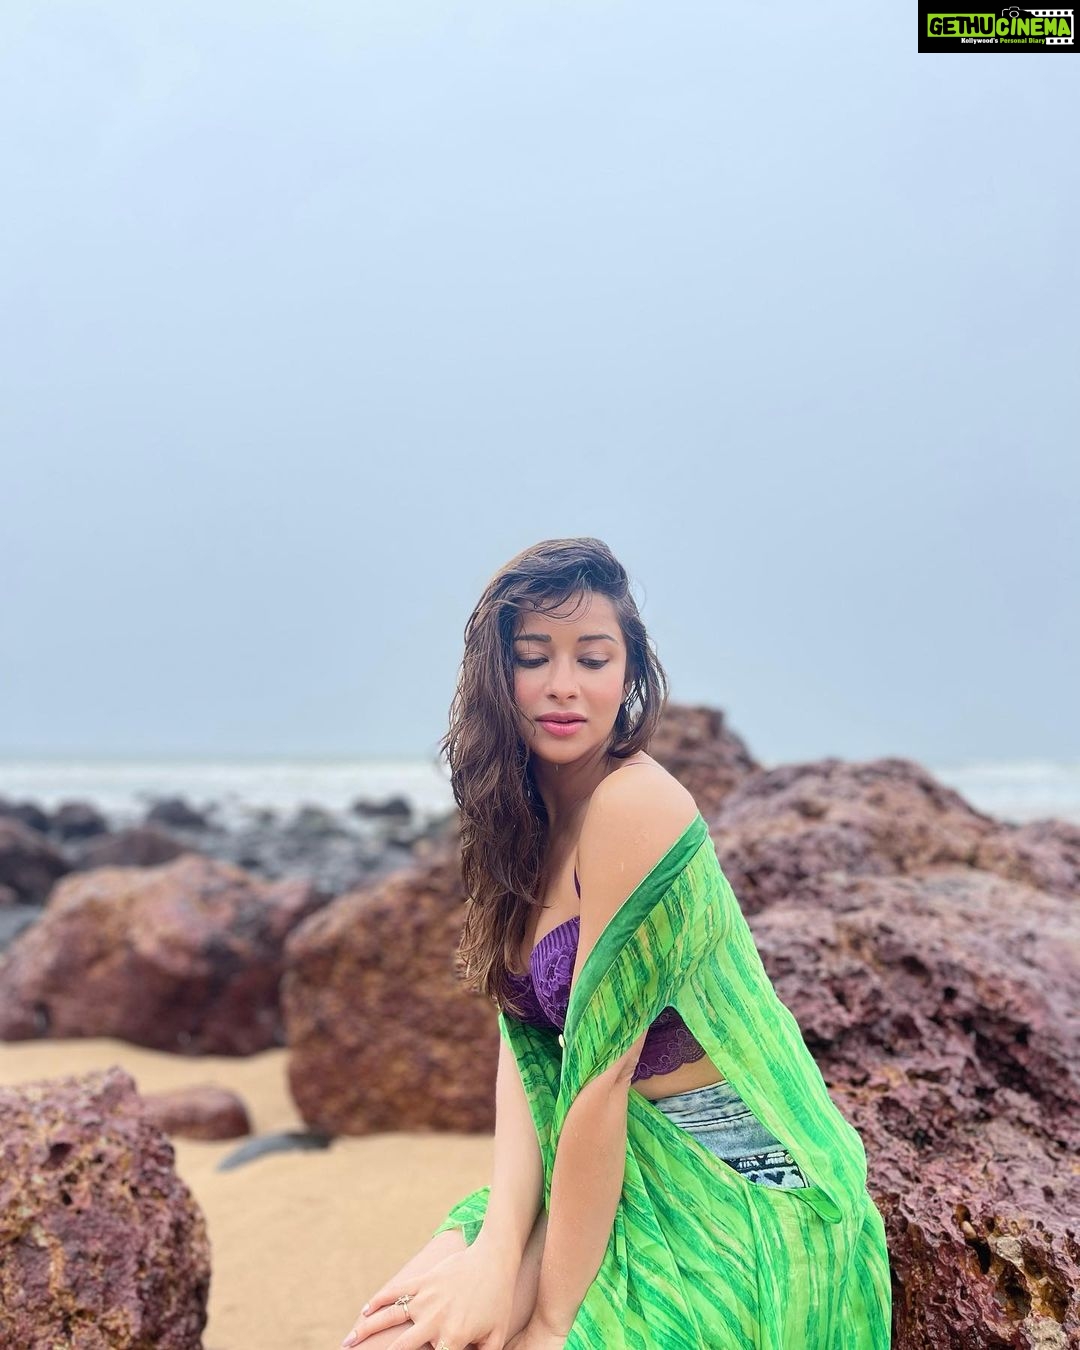 Madhuurima Instagram - #Repost @fhmindia with @make_repost ・・・ An actor, lawyer, dancer, and singer – you just name it and our FHMBabe, @nyra_banerjee flaunts her talent like a queen bee. “My personal style is vibrant and neon retrofits, turquoise, violet and all the good colours.” She said while talking to us! . . . . Team Credits: Editor: Nitin Agarwal (@nitin.ax) Fashion Editor: Suchita Sehrawat (@suchita_tish) Stylist: Suchita Sehrawat (@suchita_tish) Make Up: Wasim Ansari (@wasimmakeupartist) Hair: Sunny Singh (@sunny_hairr) Asst.: Kavita Parmar (@kavitaparmar_makeup_hair) Location: Amanzi Sky Deck and Bar, Mumbai (@amanziskydeck) . . Wardrobe Credits: . Look 1 Bralette: Reema Anand Label @reemaanandlabel Pantie: Clovia @clovia_fashions Jacket: KayJay @kayjaybykritika Boots: Saint G @saintgworld . Look 2 Shirt: Mannat Gupta ™ @labelmannatgupta Skirt: Ranbir Mukherjee @ranbirmukherjeeofficial Shoes: Monrow Shoes @monrowshoes Earrings: Antarez Jewels @antarez.jewels Bracelet: Arkish Jewels @arkishjewelsofficial Neckpiece: Rubans accessories @rubans.in . Look 3 Bralette: Clovia @clovia_fashions Skirt: Trenbee @trenbee_ Shoes: Eridani @eridani.in Bracelet: Arkish Jewels @arkishjewelsofficial Neckpiece: Rubans accessories @rubans.in . . #fhmindia #fhm #nyrabanerjee #magazinecover #fhmbabe #model #hot #sexy #bollywood #divyadrishti #sanasayyad #drikshit #adhvikmahajan #shivya #nyra #divya #starplus #sanvik #divyadrishtiofficial #dishi #adhvik #sana #mishkatvarma #dd #divyasharma #rakshit #adhvikofficial #nyran #nyrains